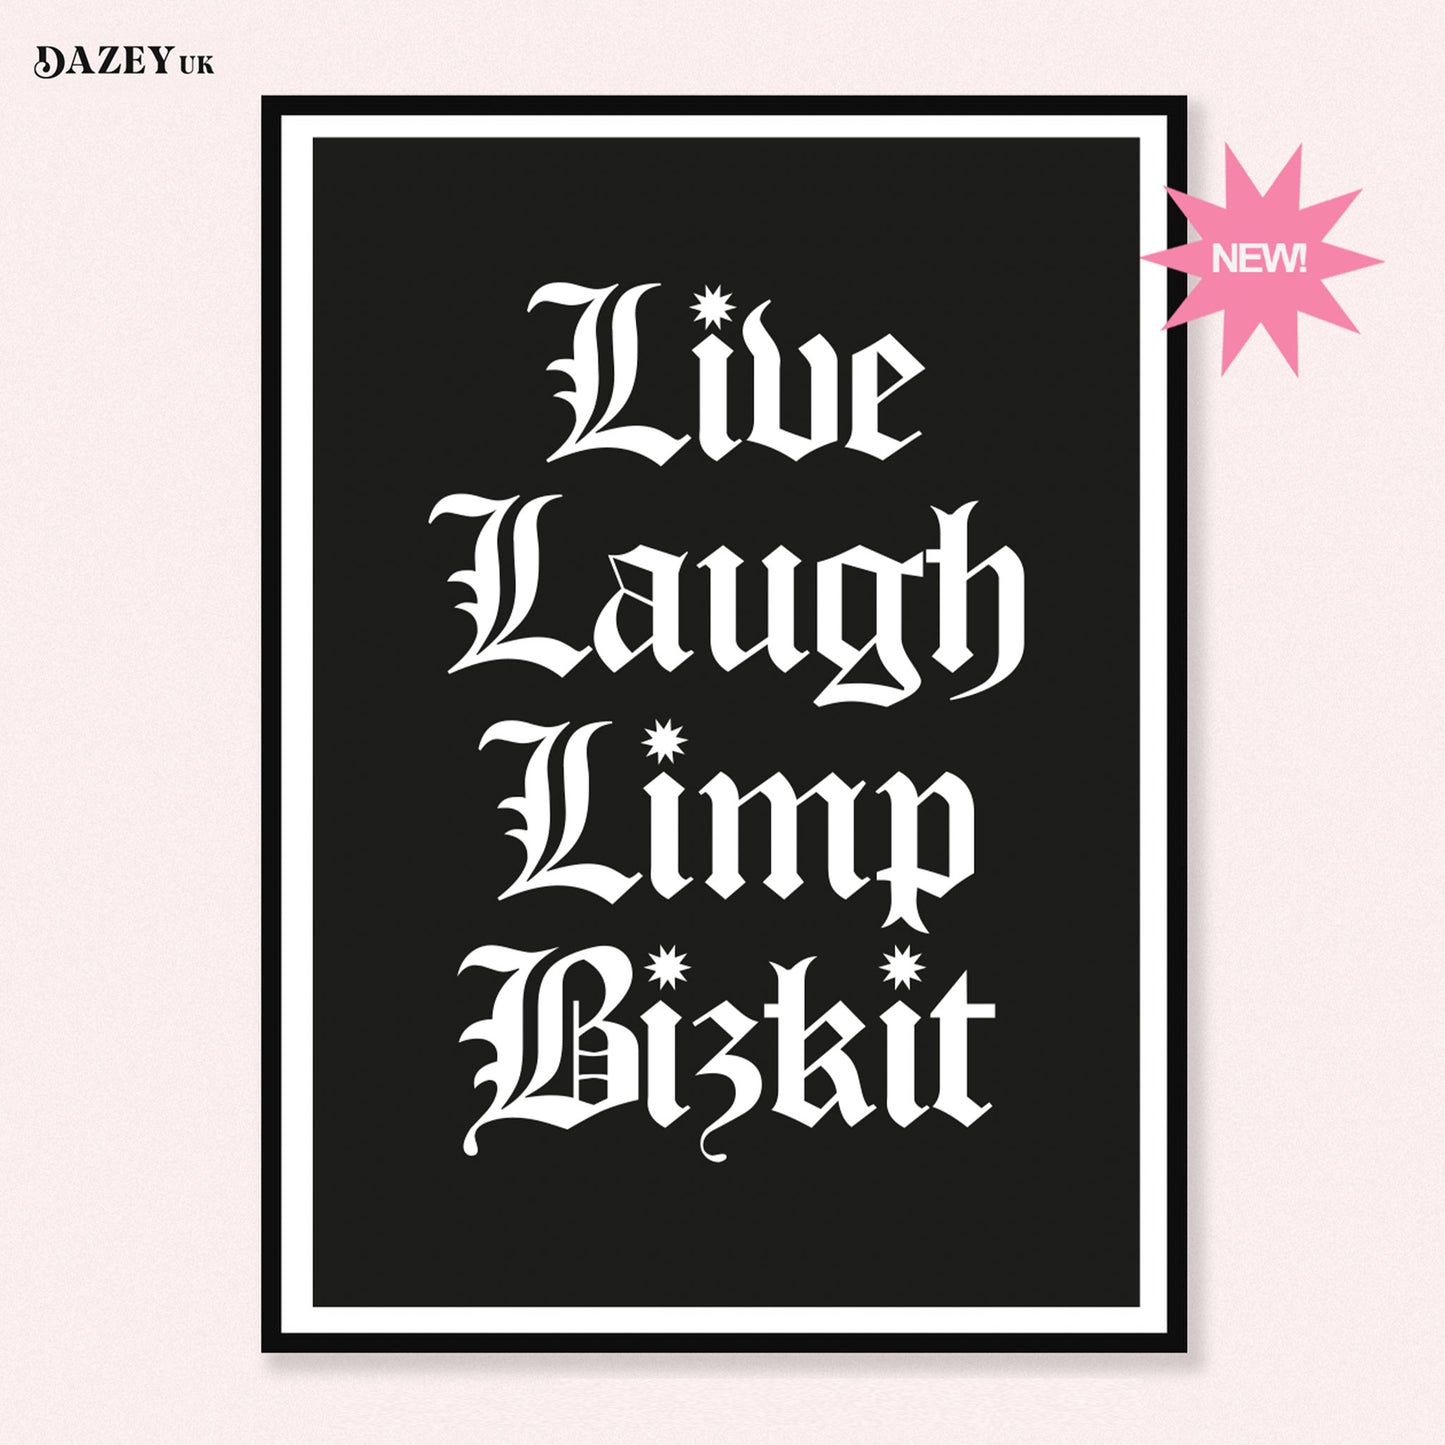 Live Laugh Limp Bizkit Art Print